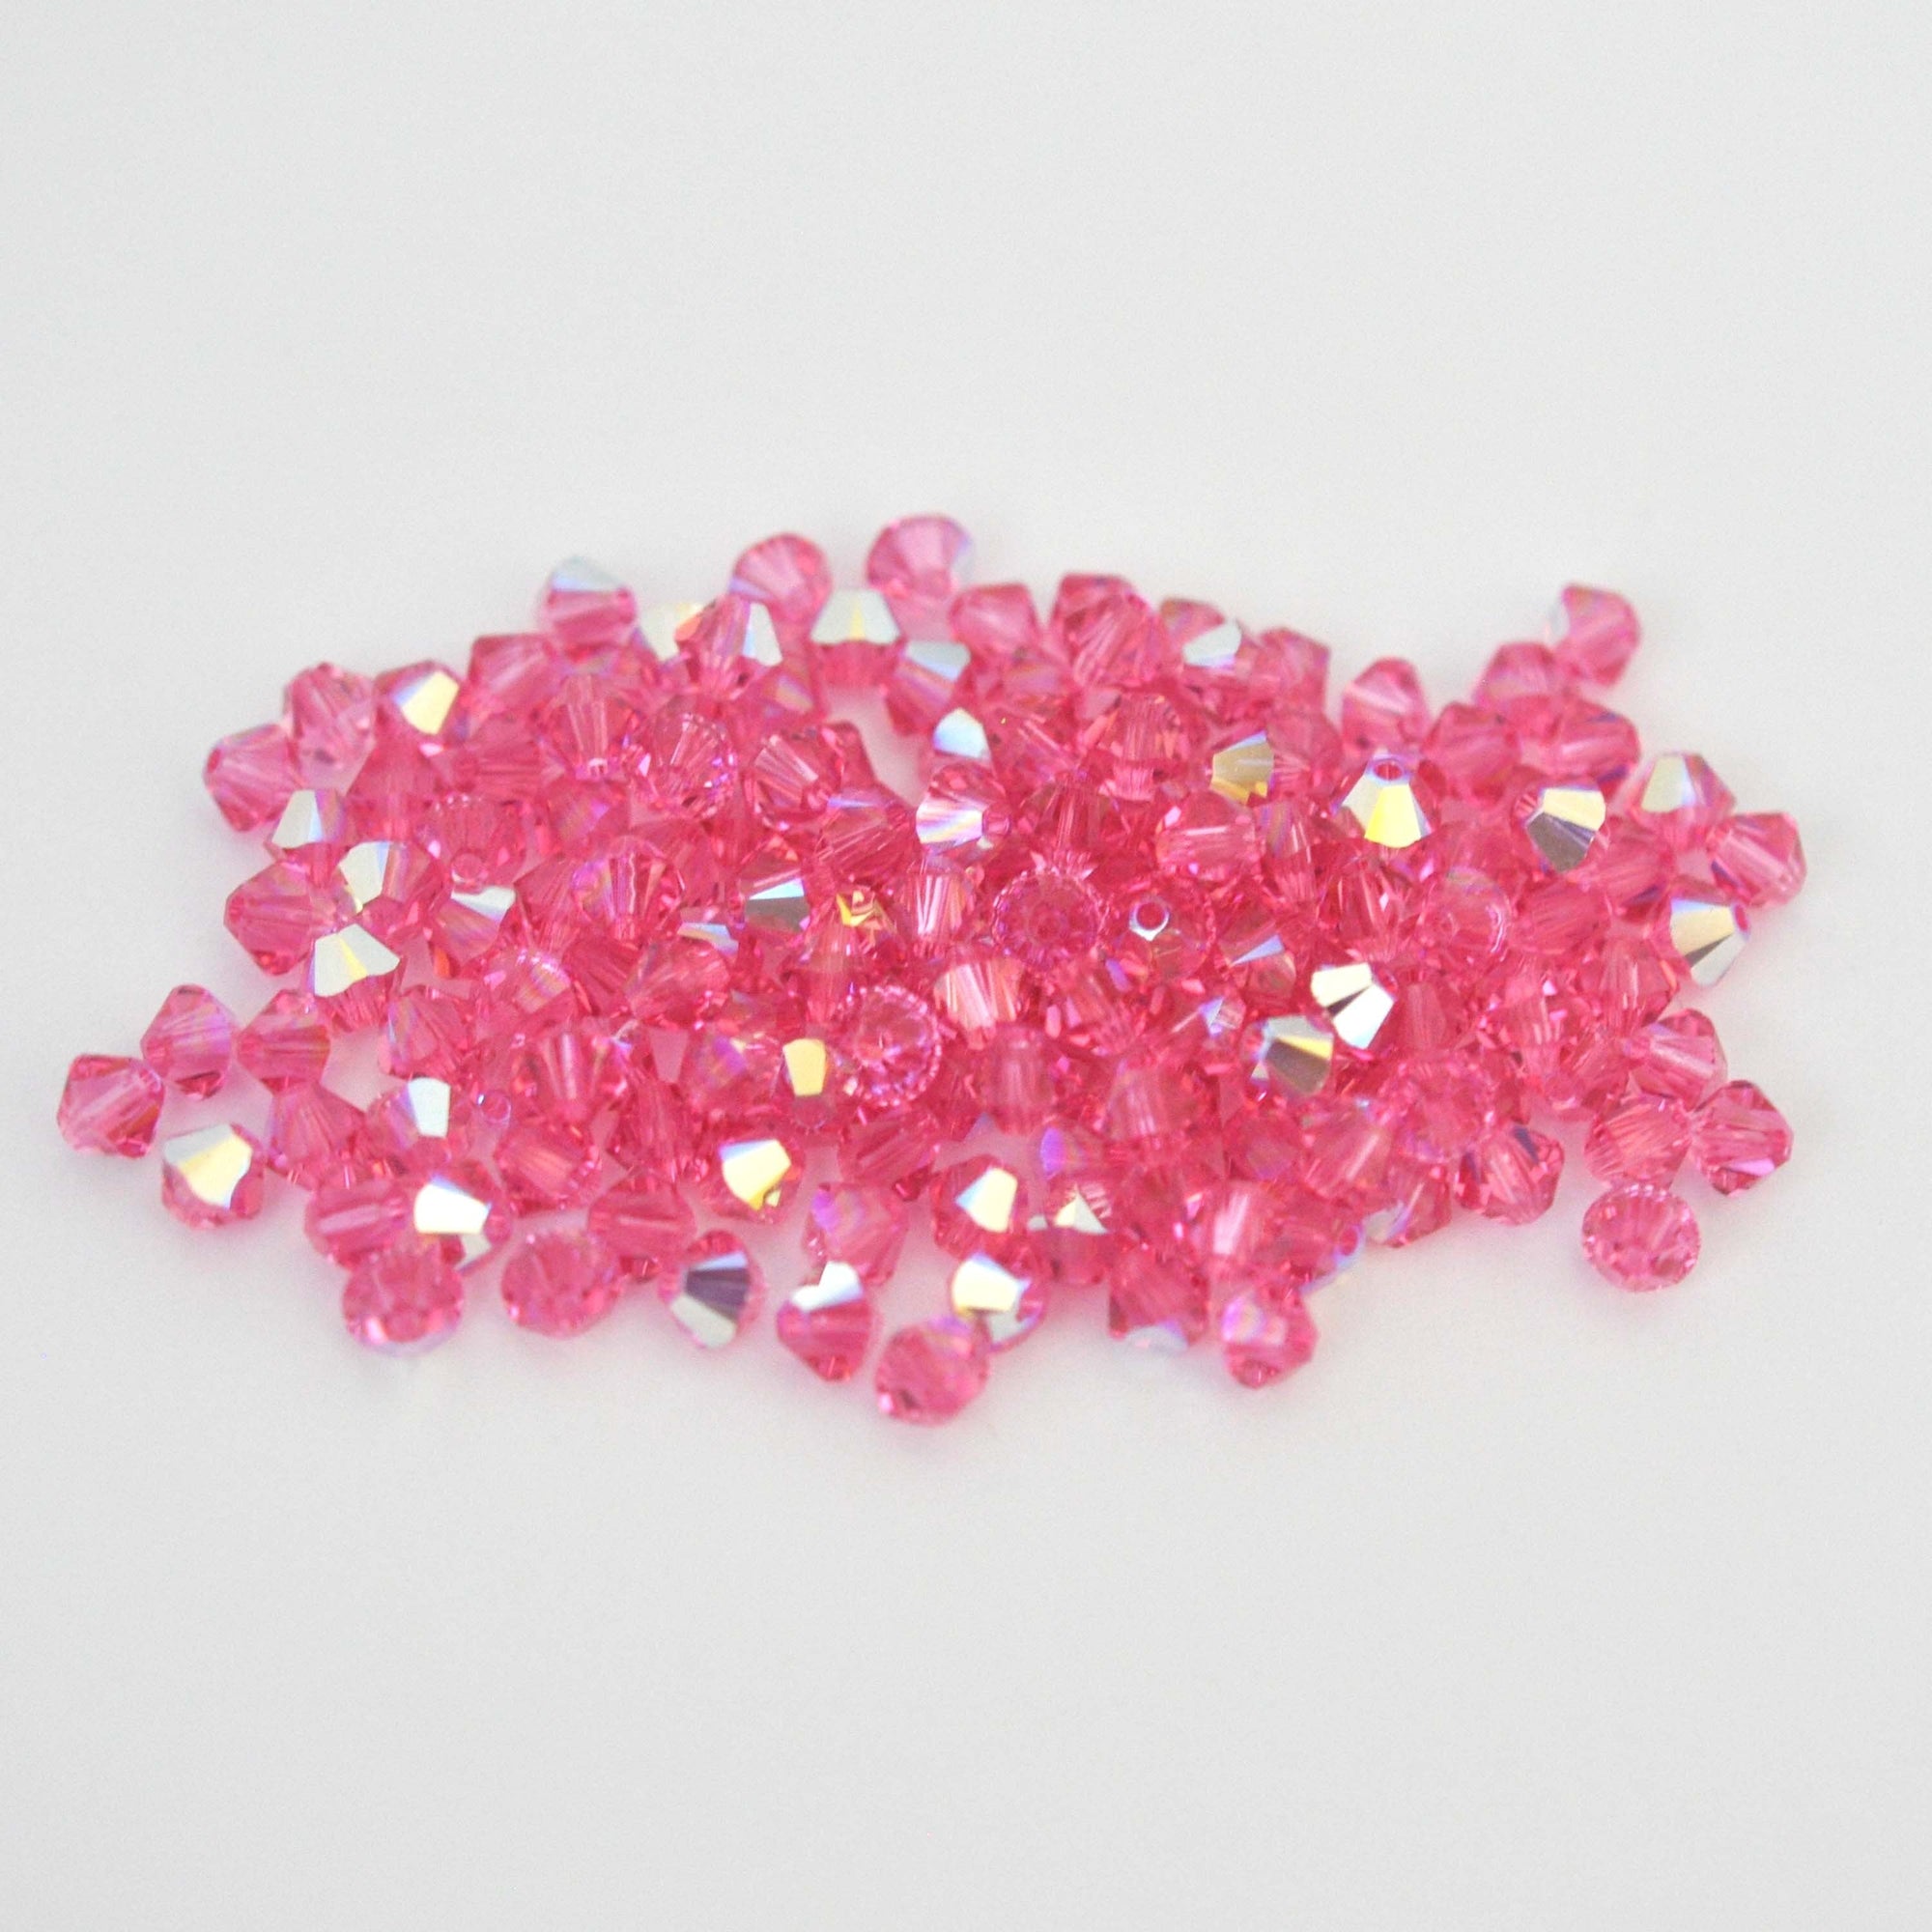 Rose AB Bicone Beads 5328 Barton Crystal 6mm